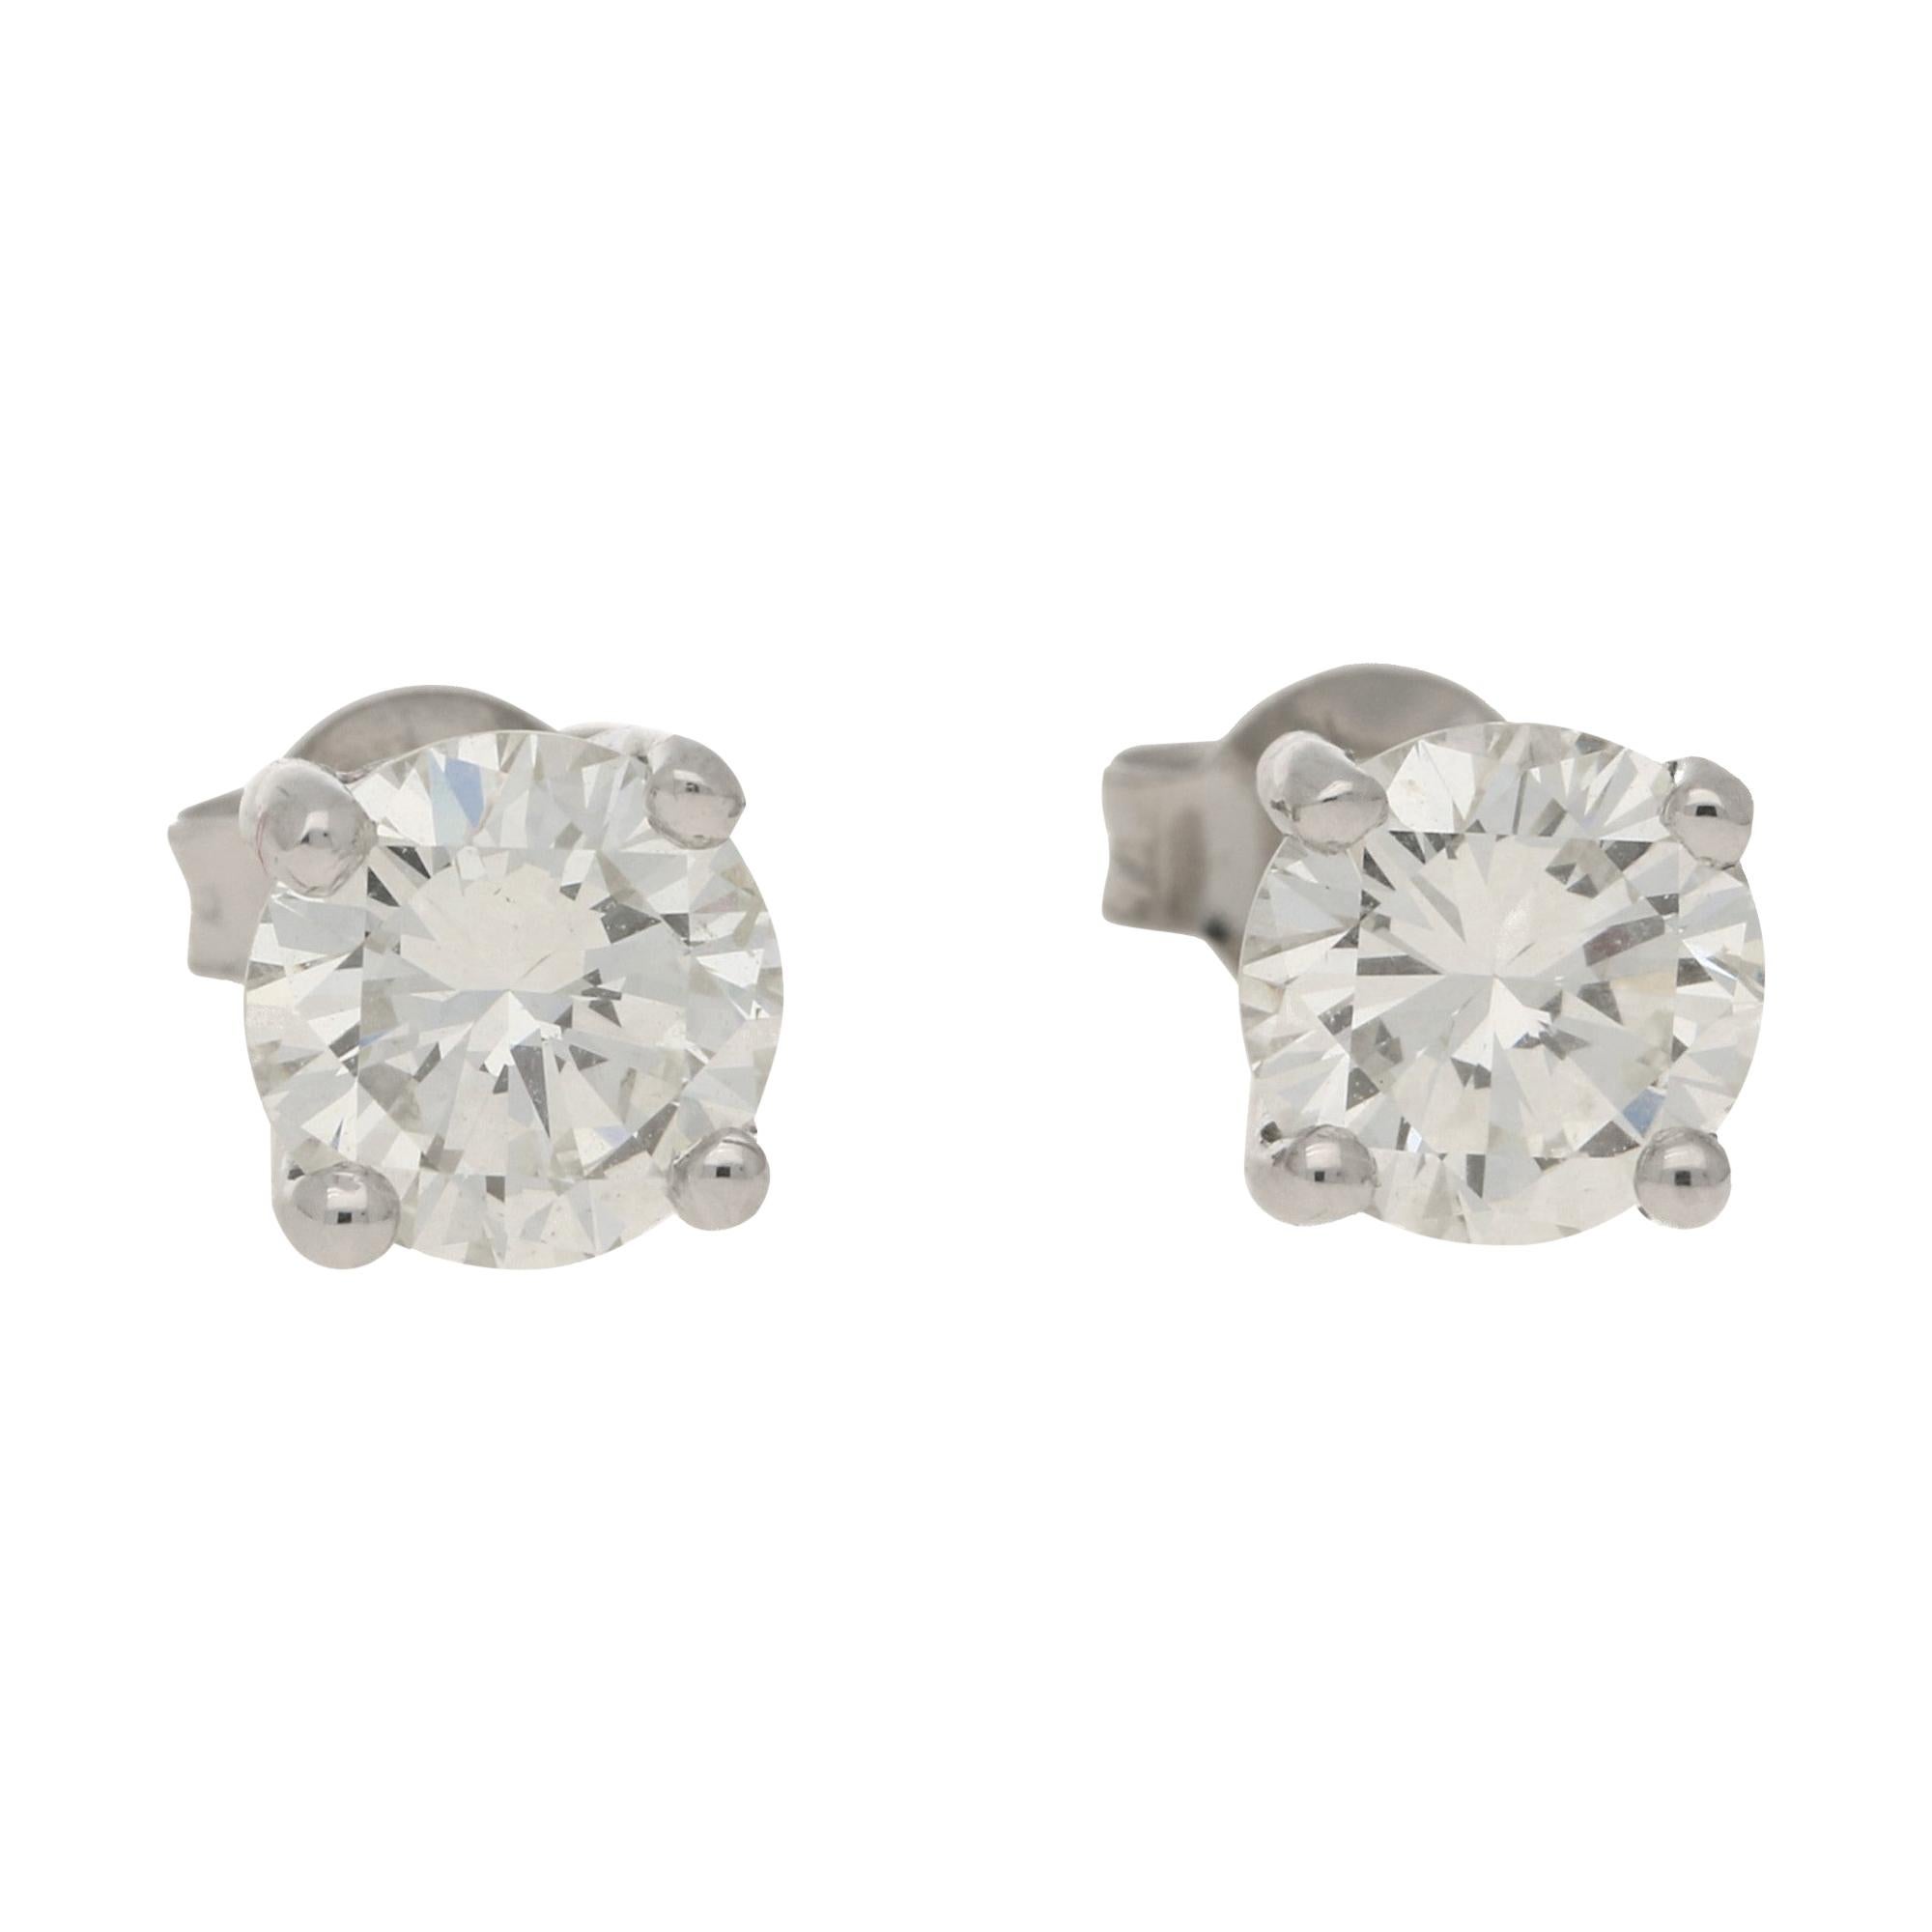 Diamond Stud Earrings Set in 18k White Gold 2.46 Carat